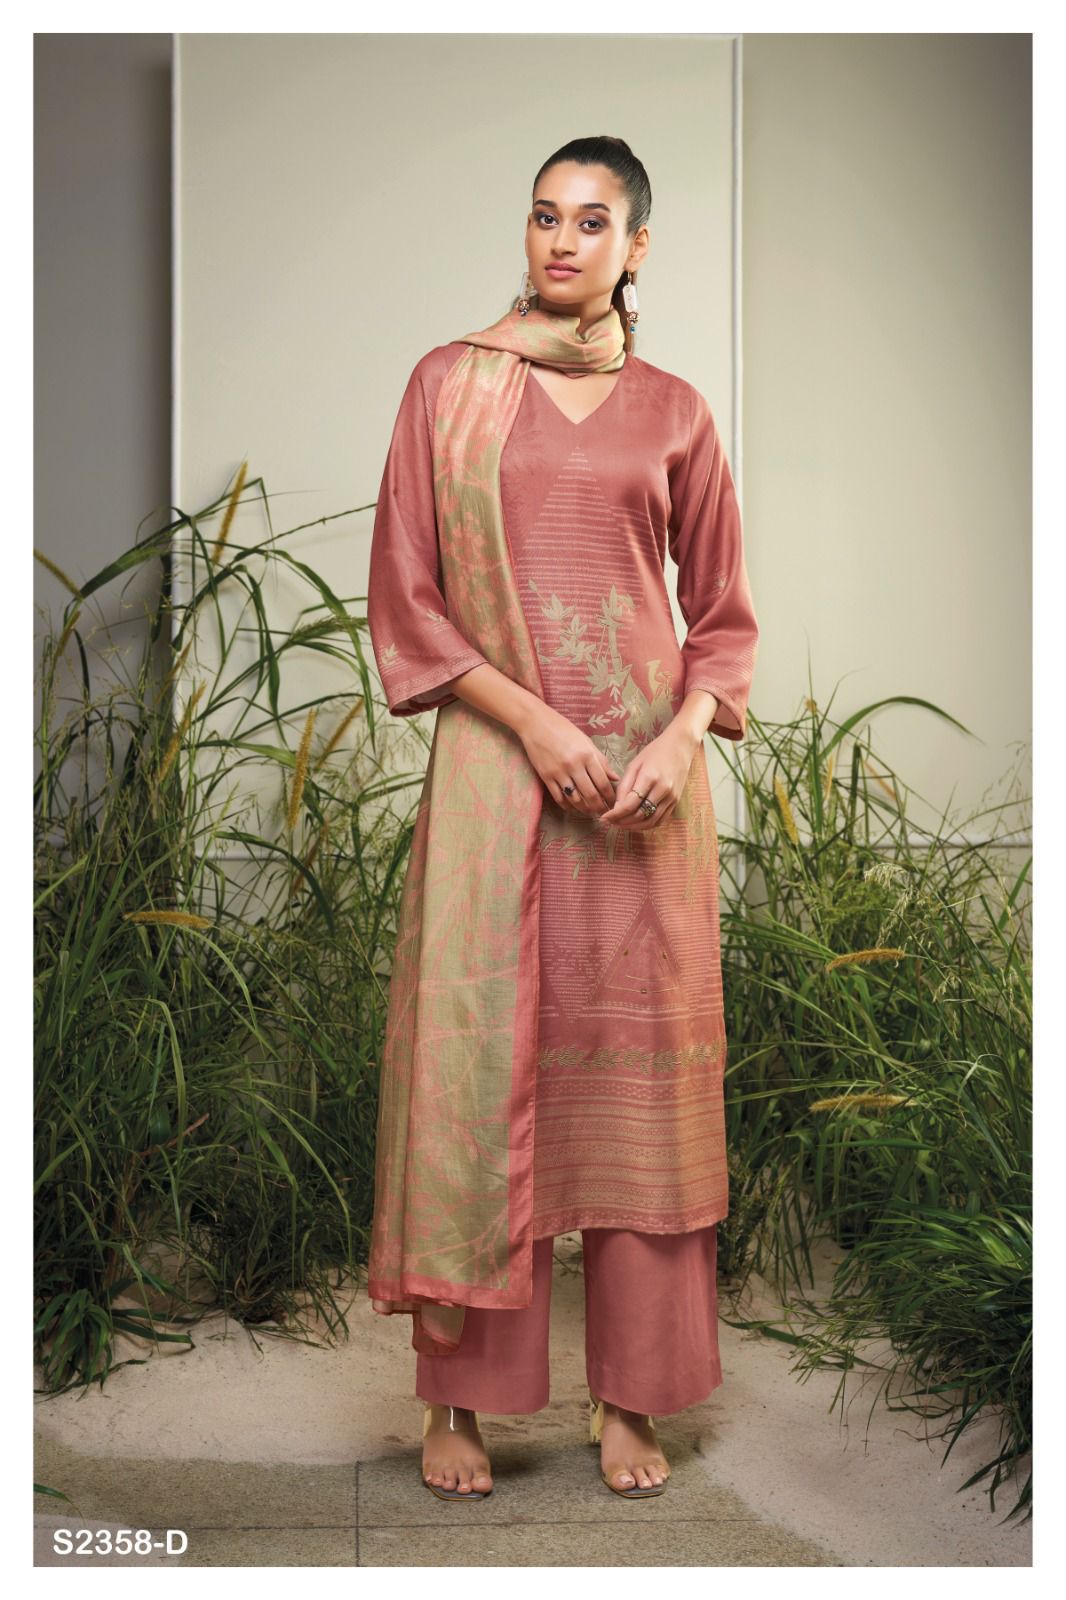 Telineah 2358 Ganga Bemberg Silk Plazzo Style Suits Supplier